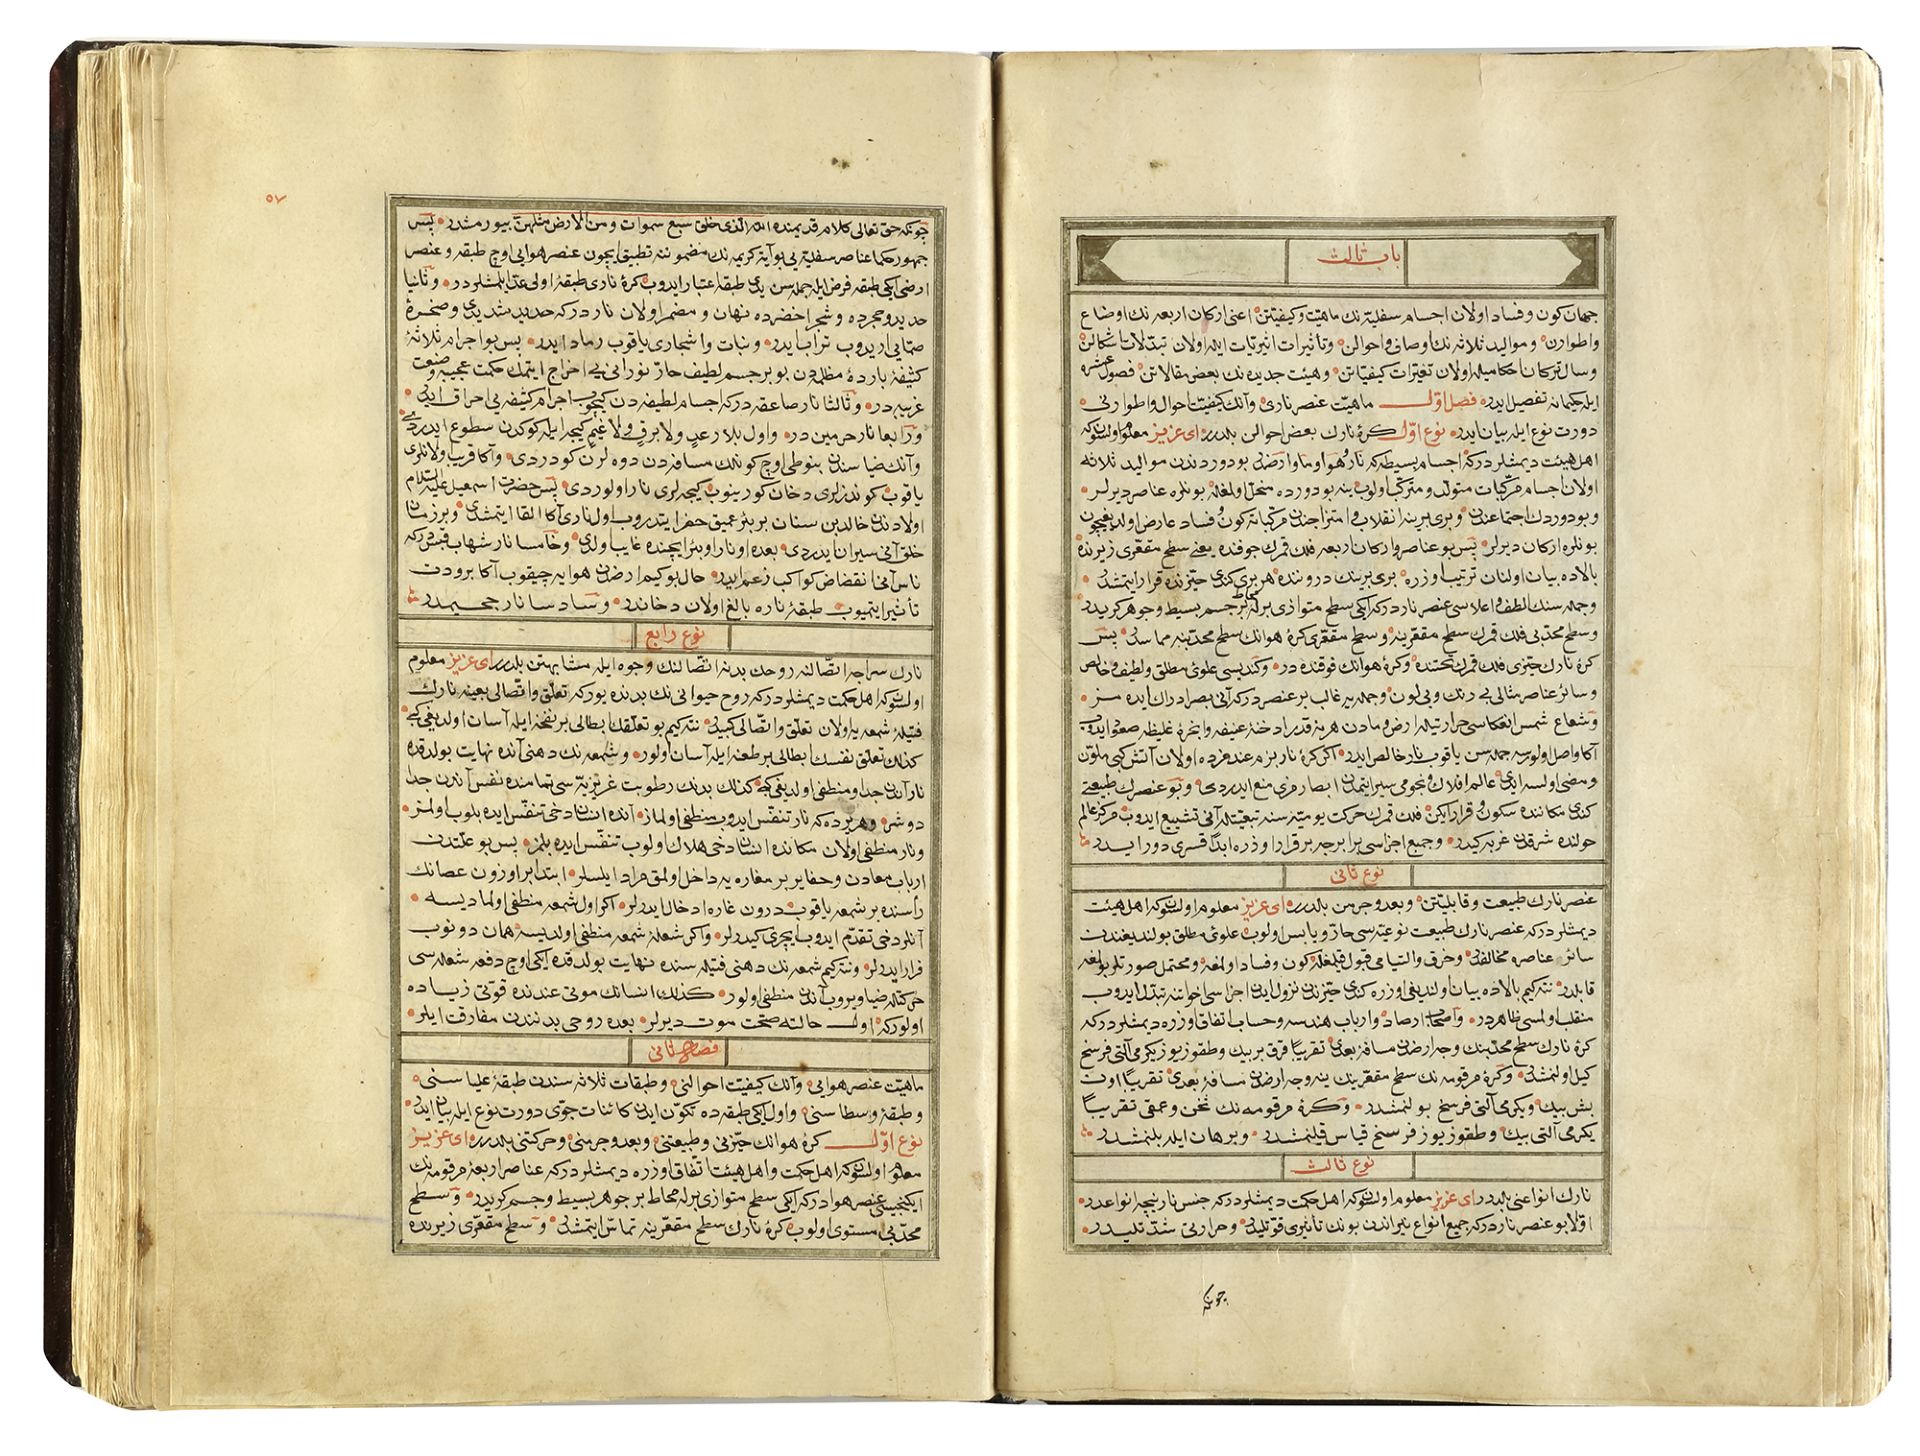 MARIFETNAME, IBRAHIM HAKKI, COPIED BY SAE'D ALLAH BIN ALI BIN AHMED, TURKEY, 1221 AH/1806 AD - Bild 21 aus 58